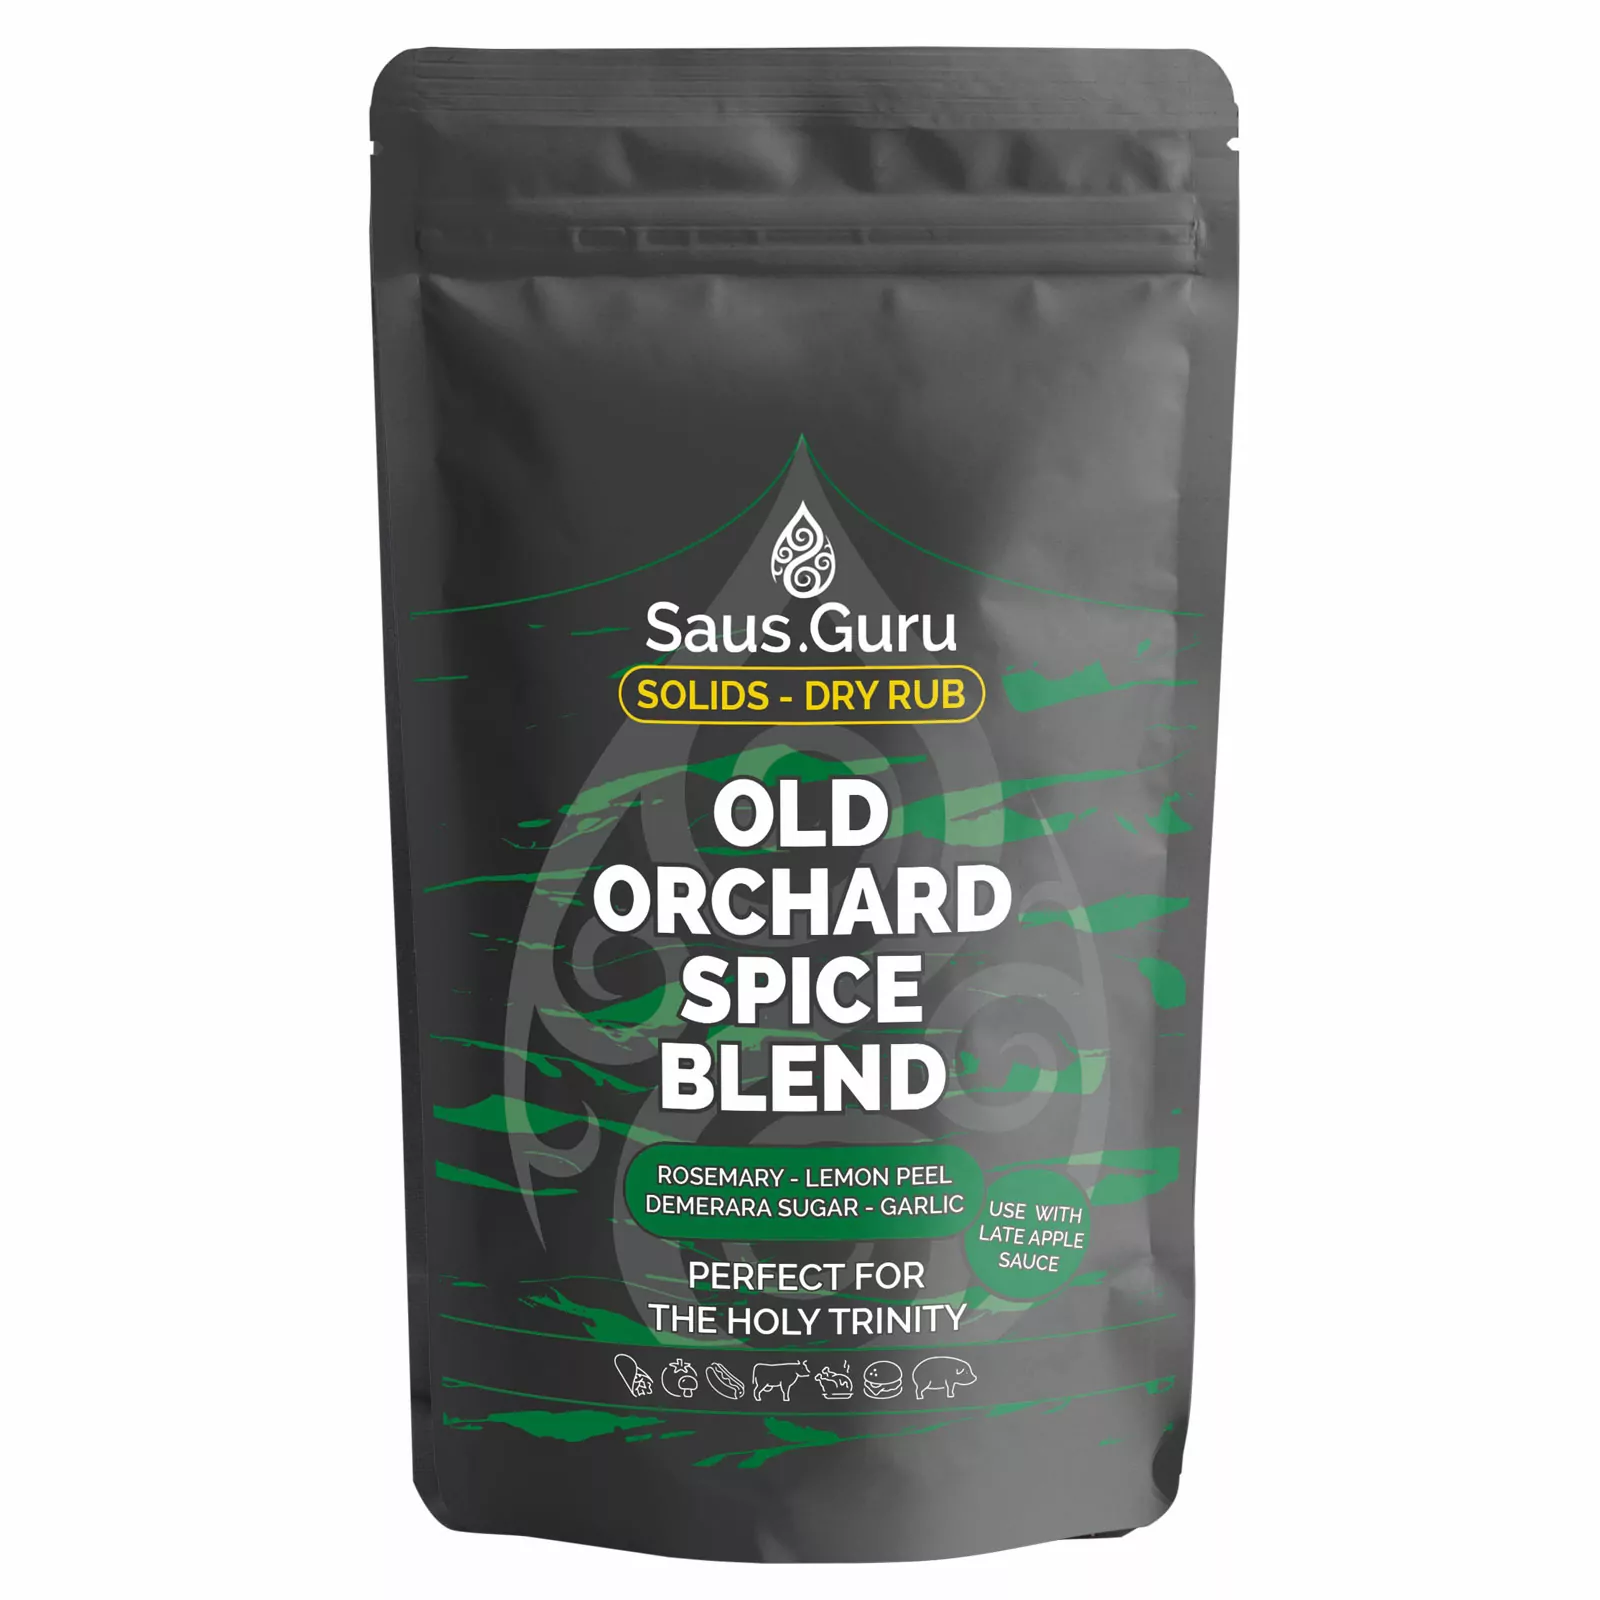 Saus.Guru Old Orchard Spice Blend - Dry Rub 190G